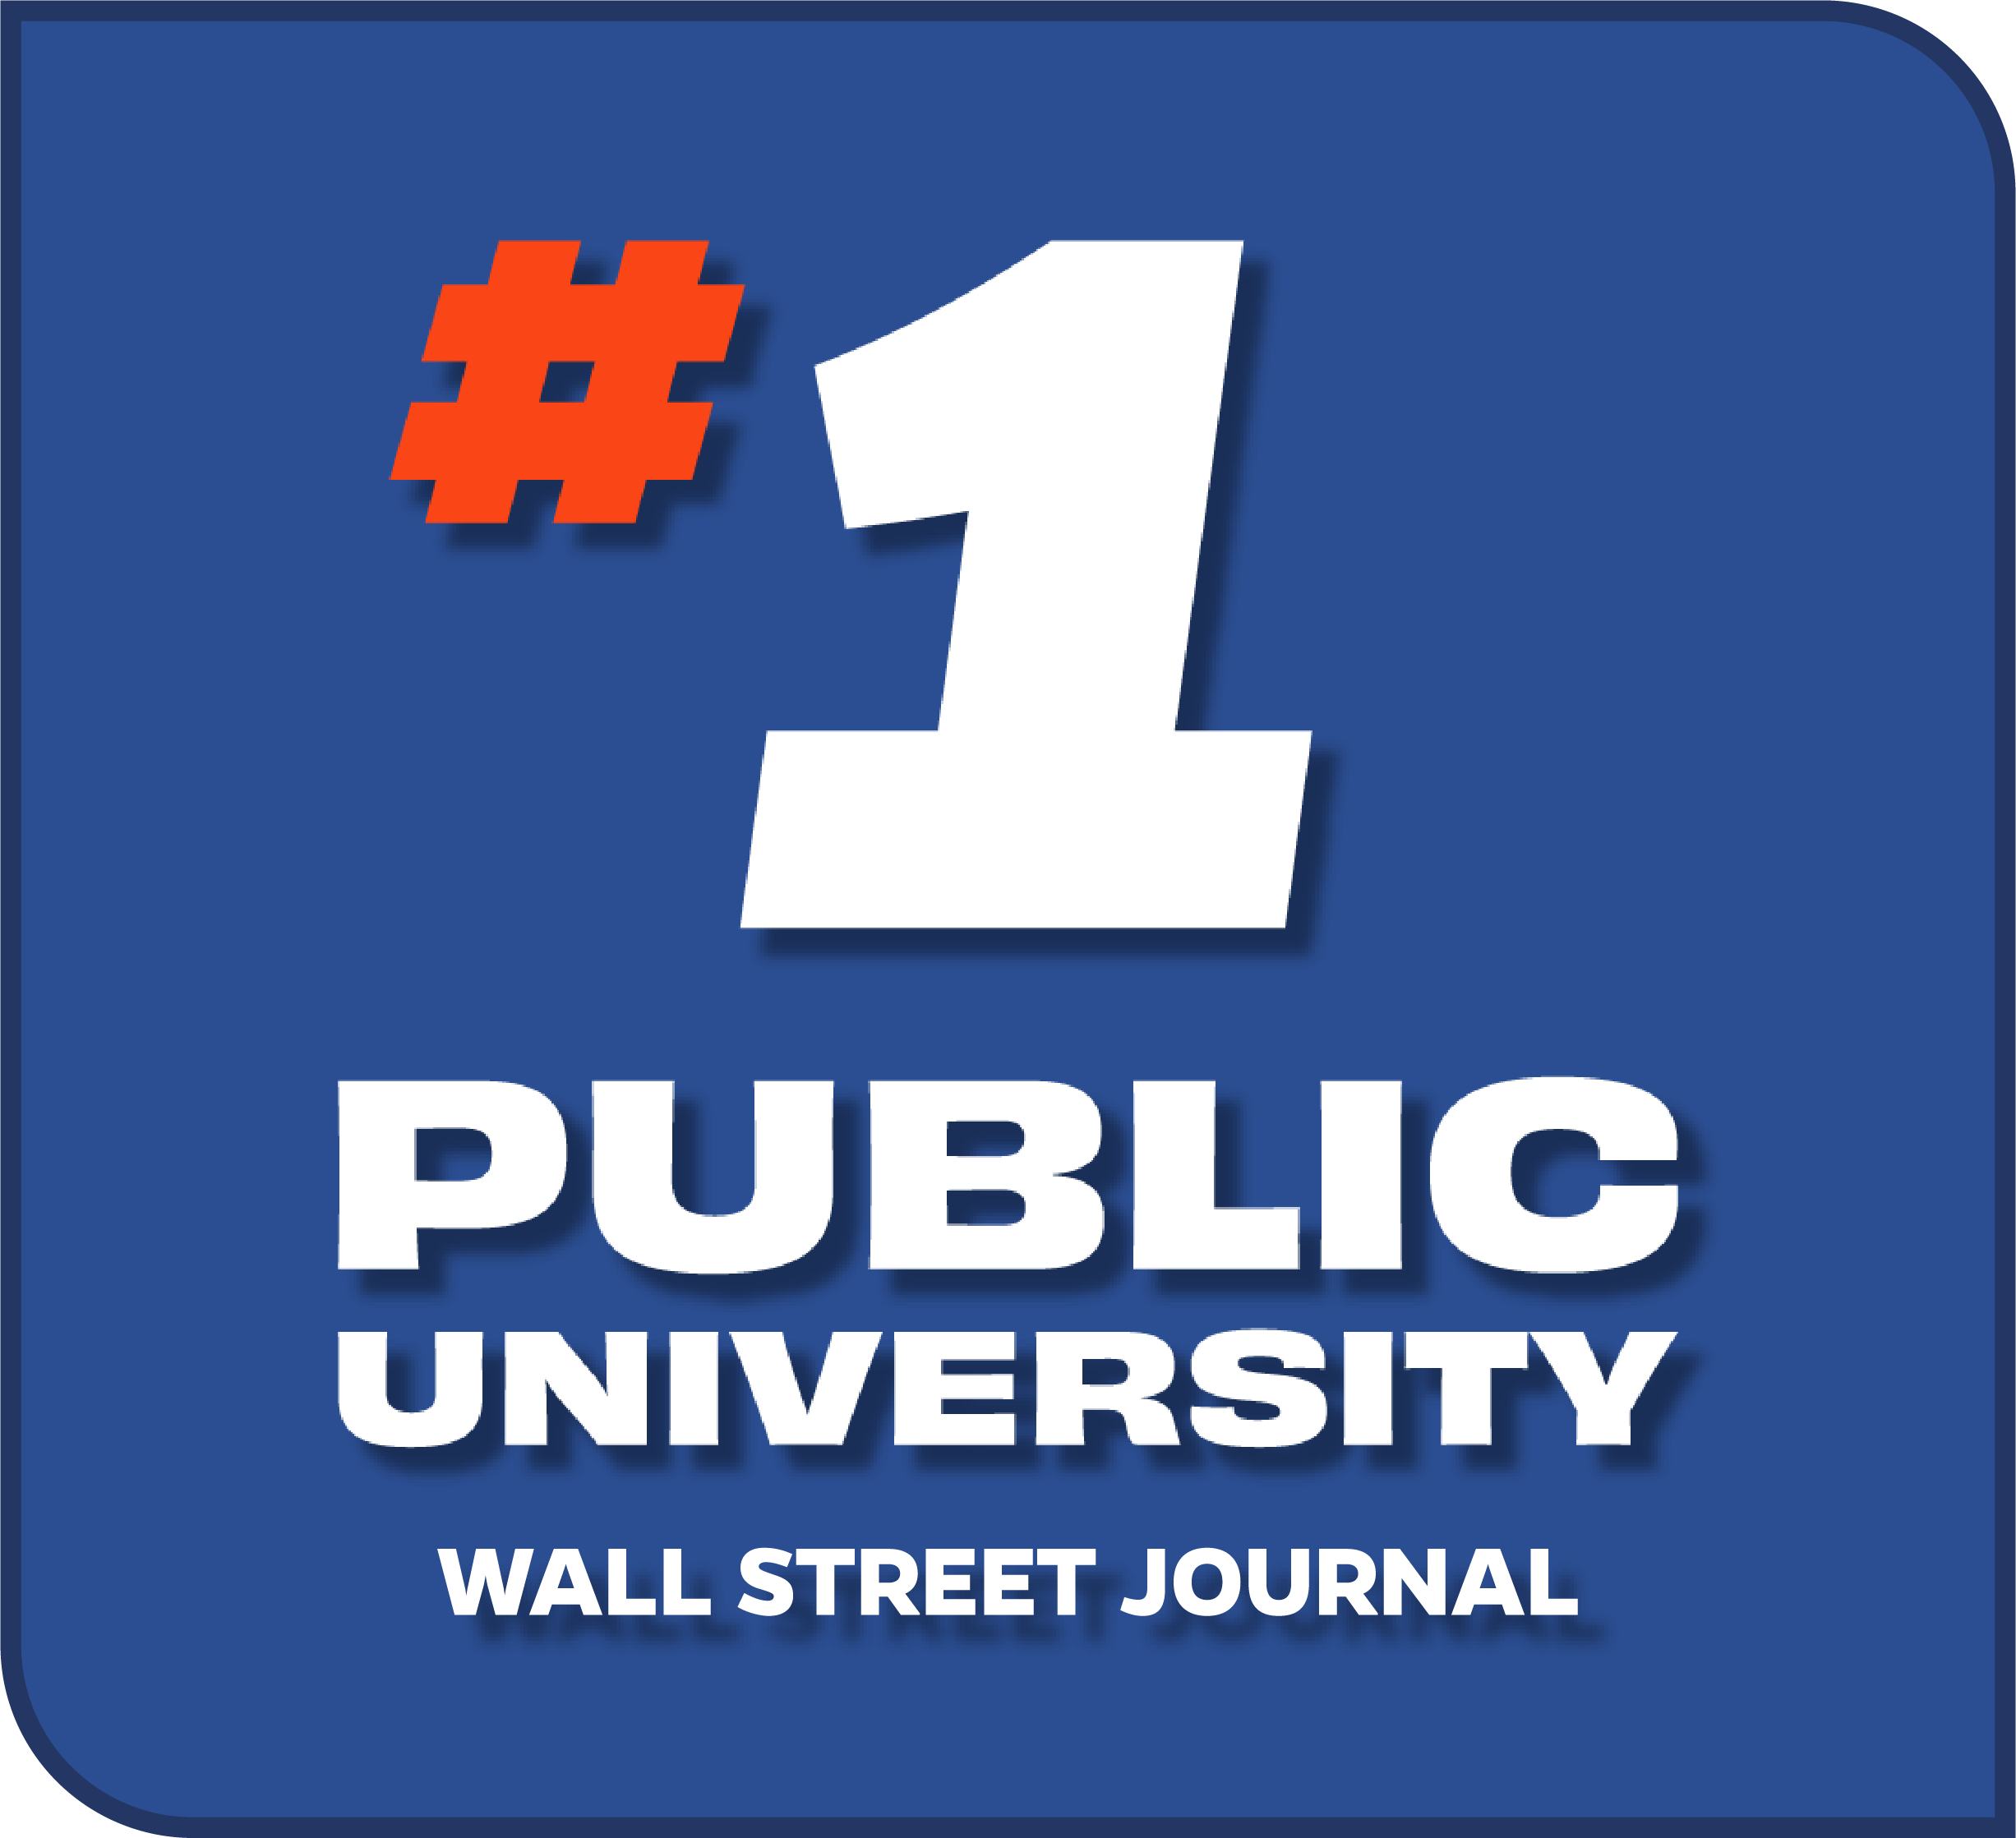 Number 1 Public University - Wall Street Journal